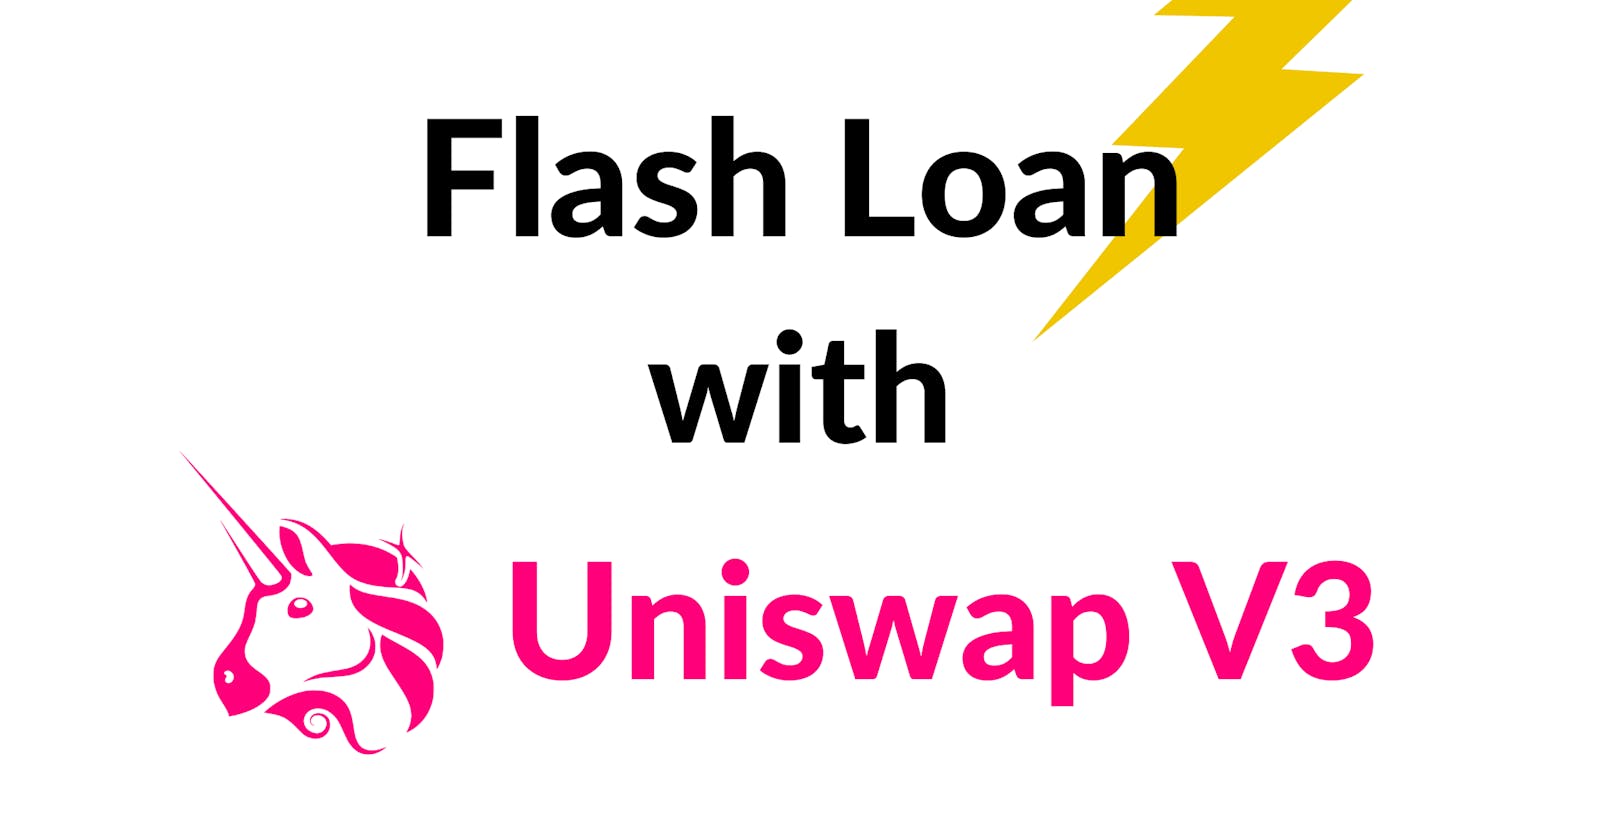 Create a Flash Loan with Uniswap V3